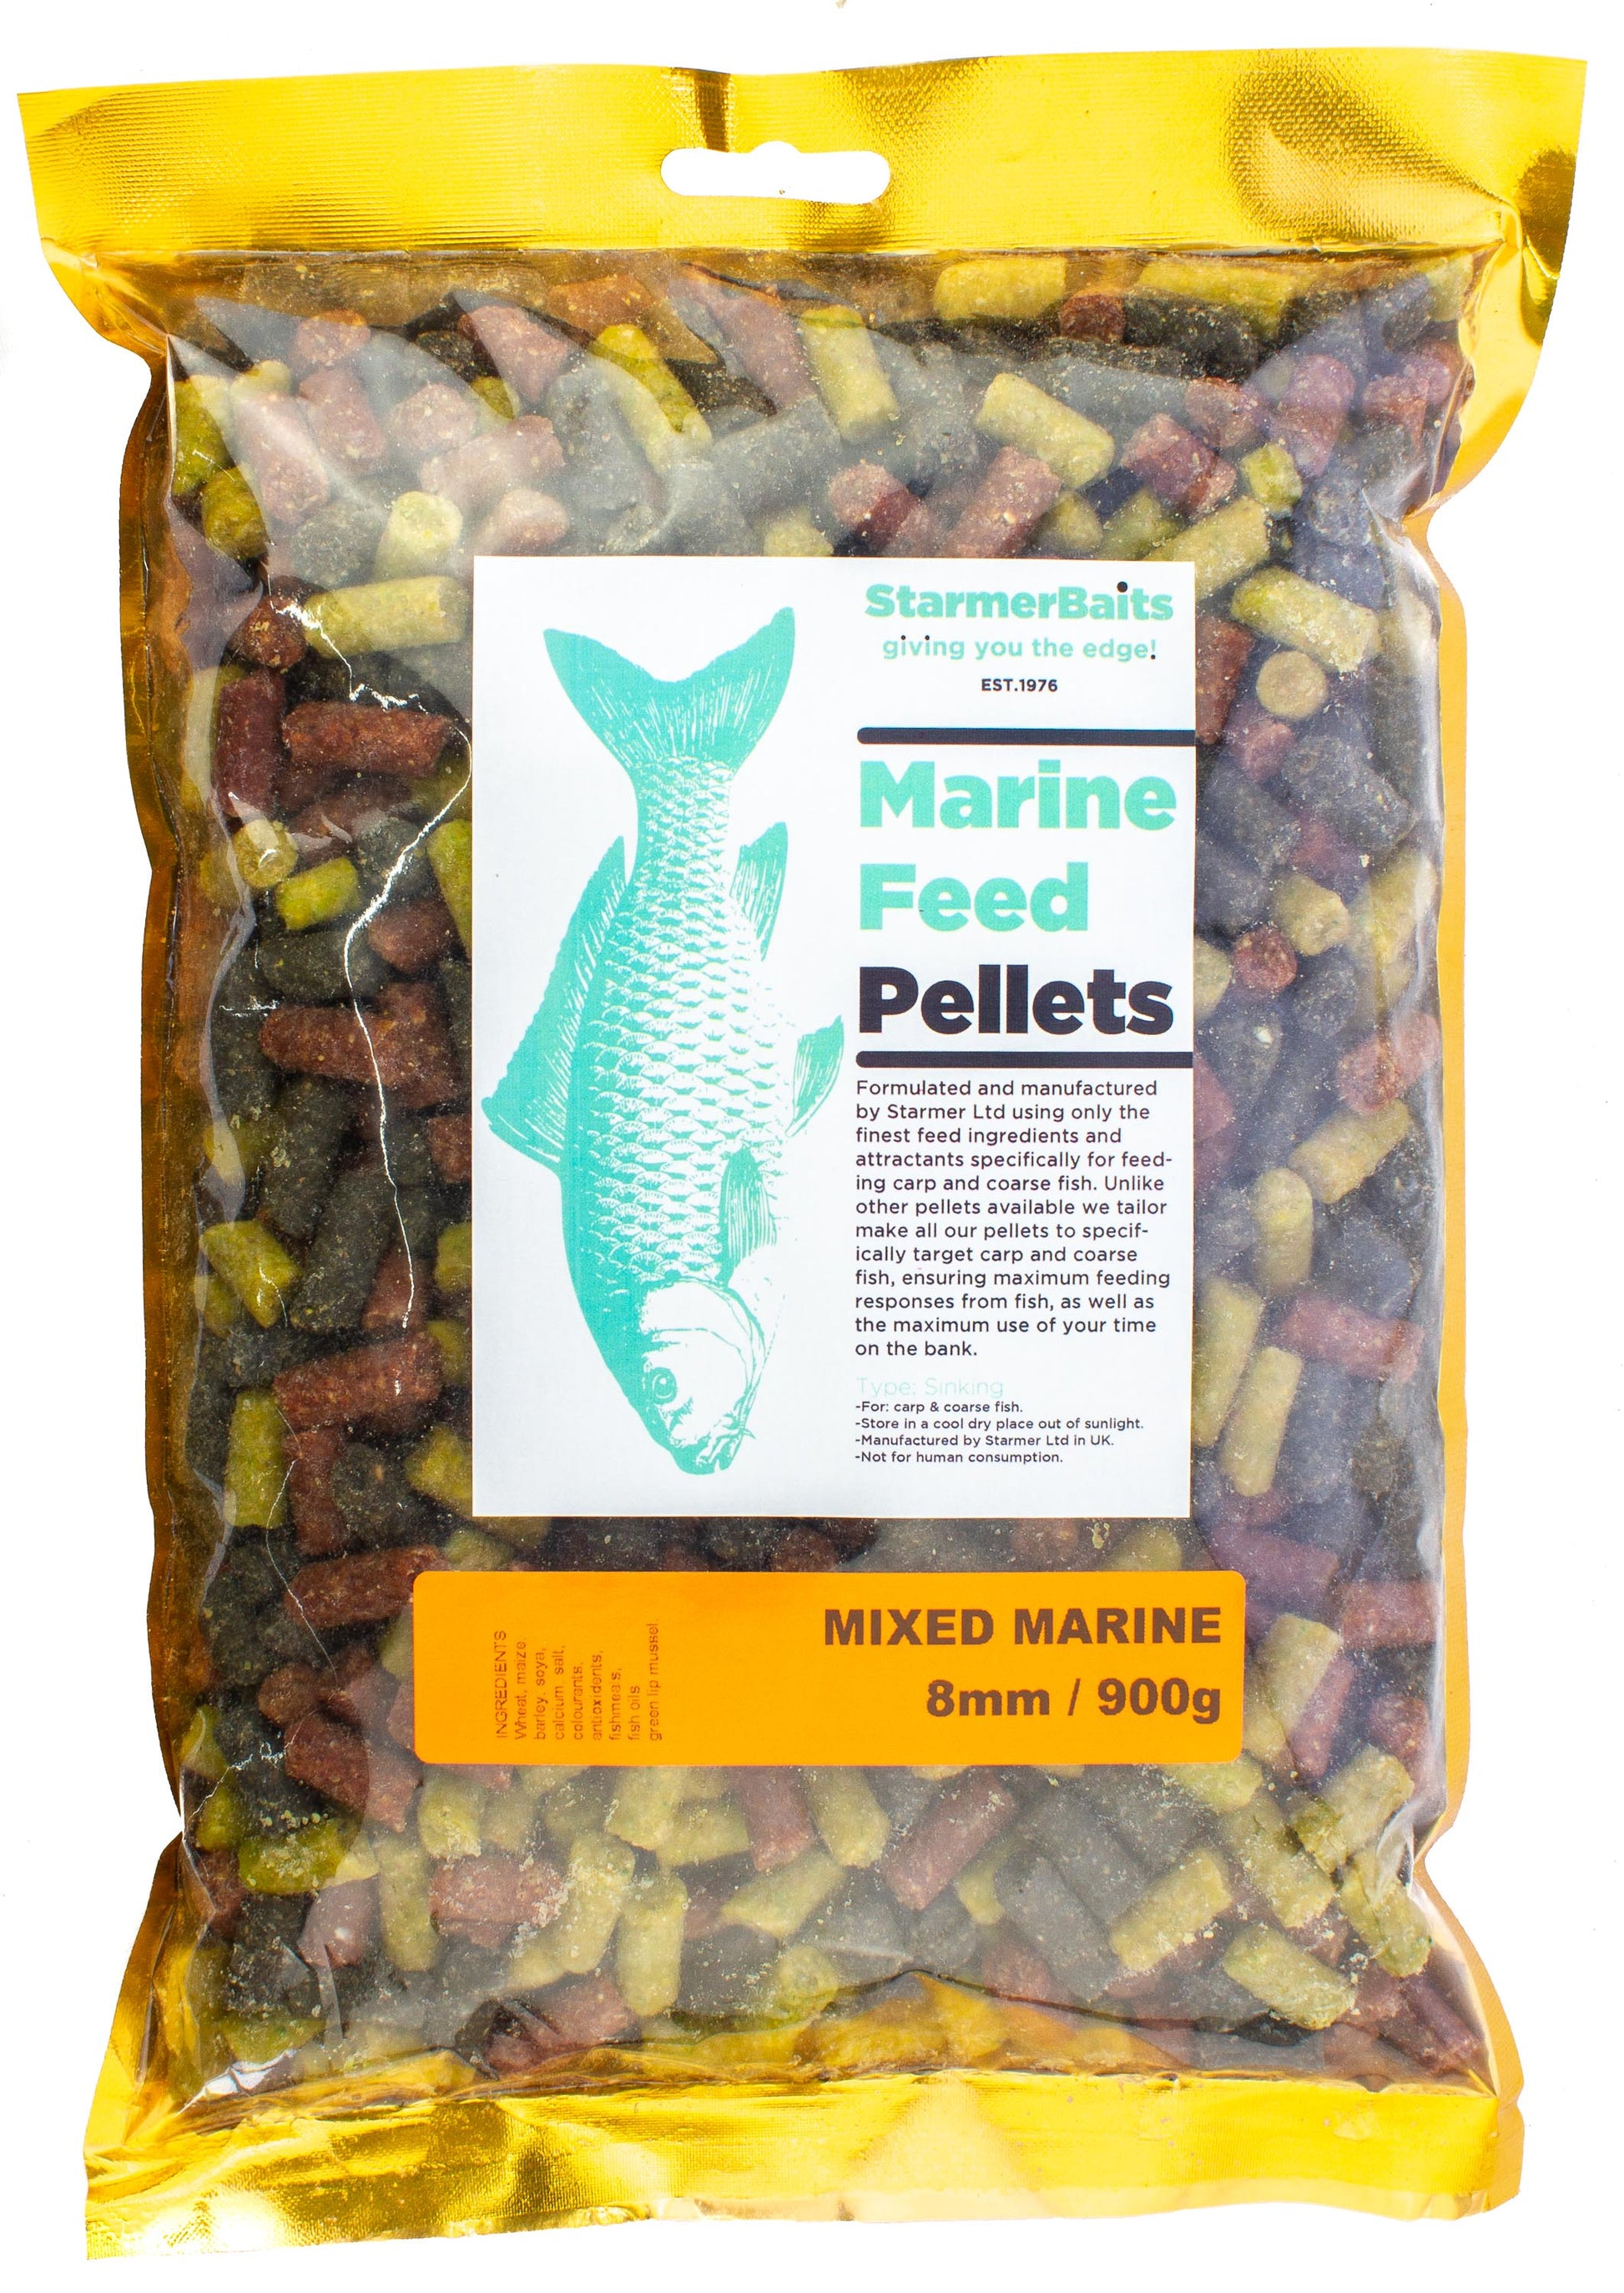 8mm Mixed marine feed pellets